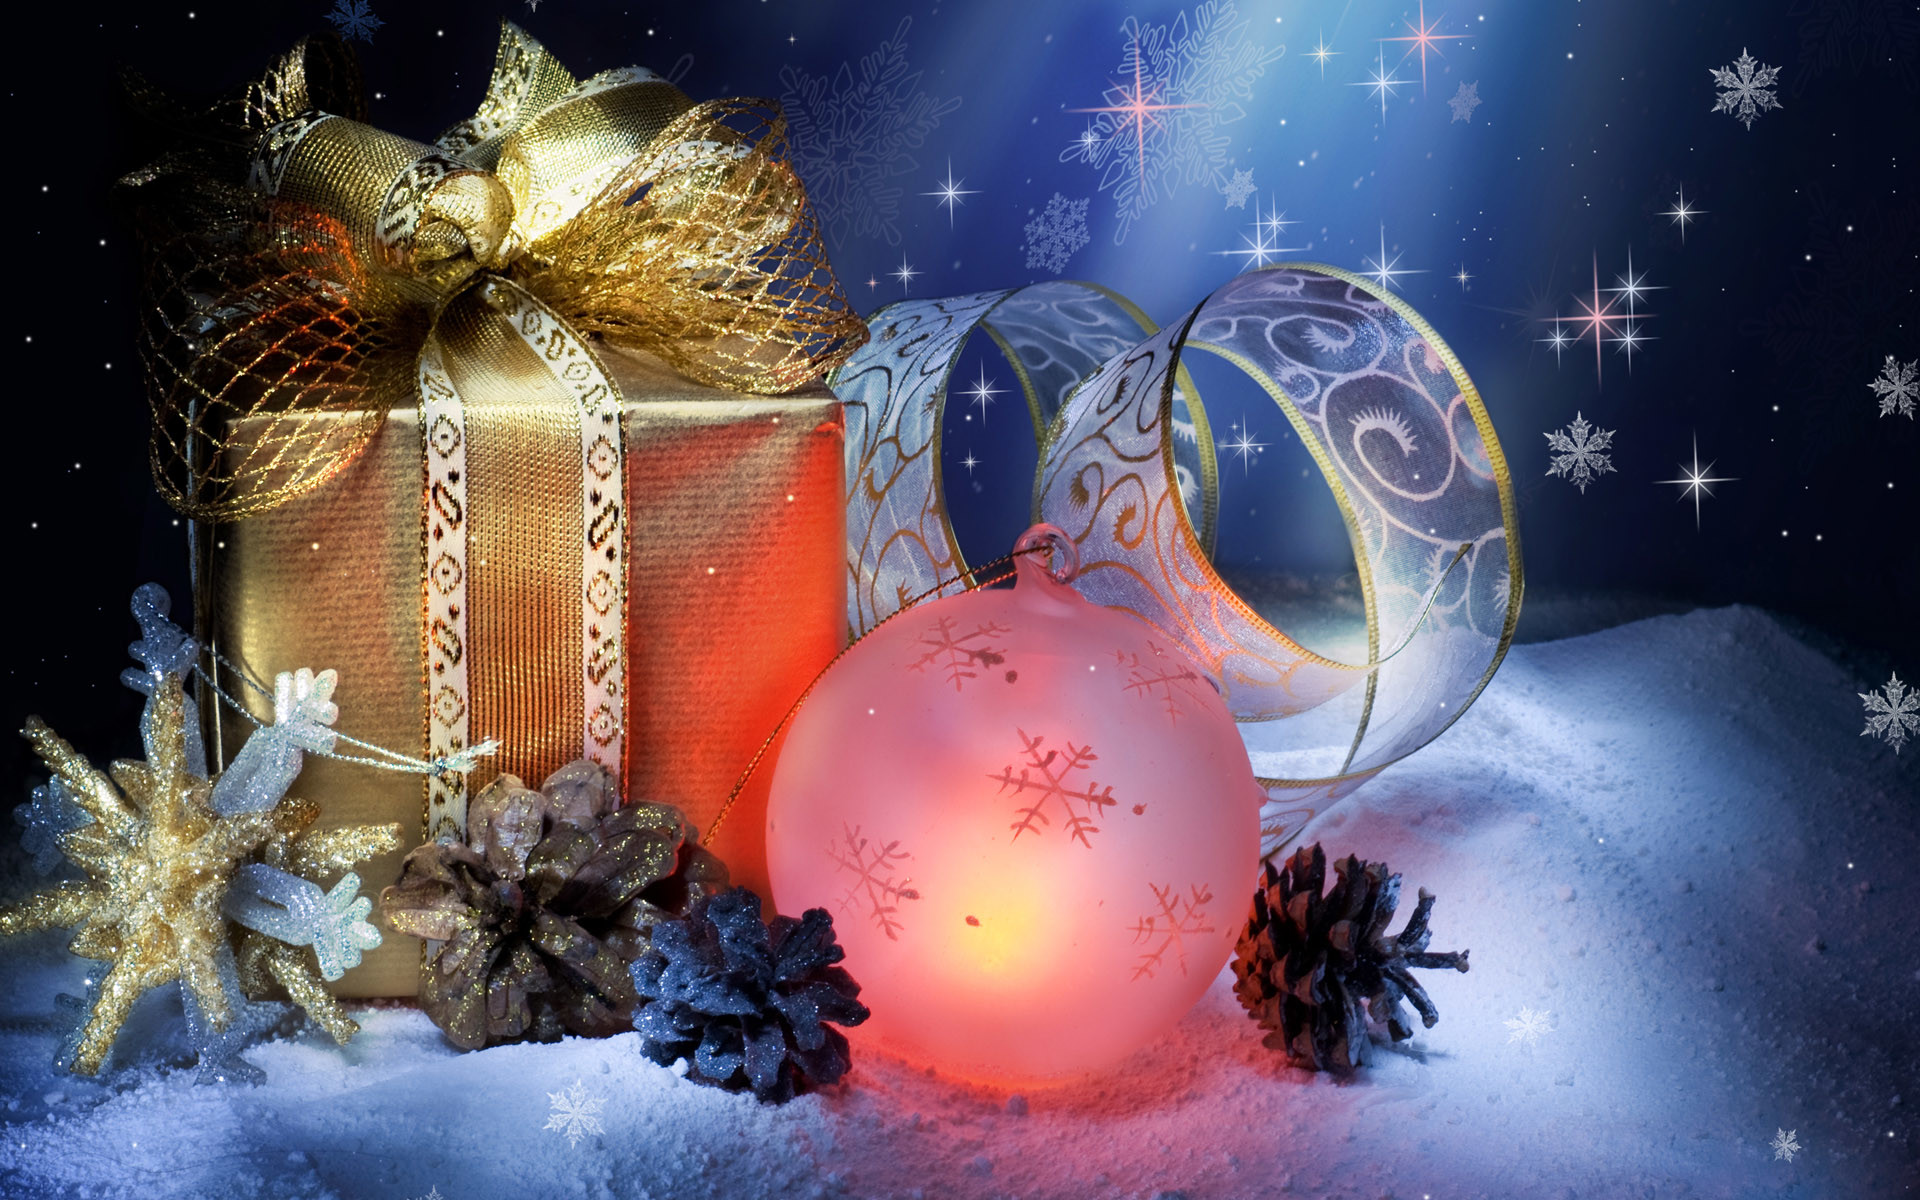 Best Of Free Christmas Background Images for Desktop